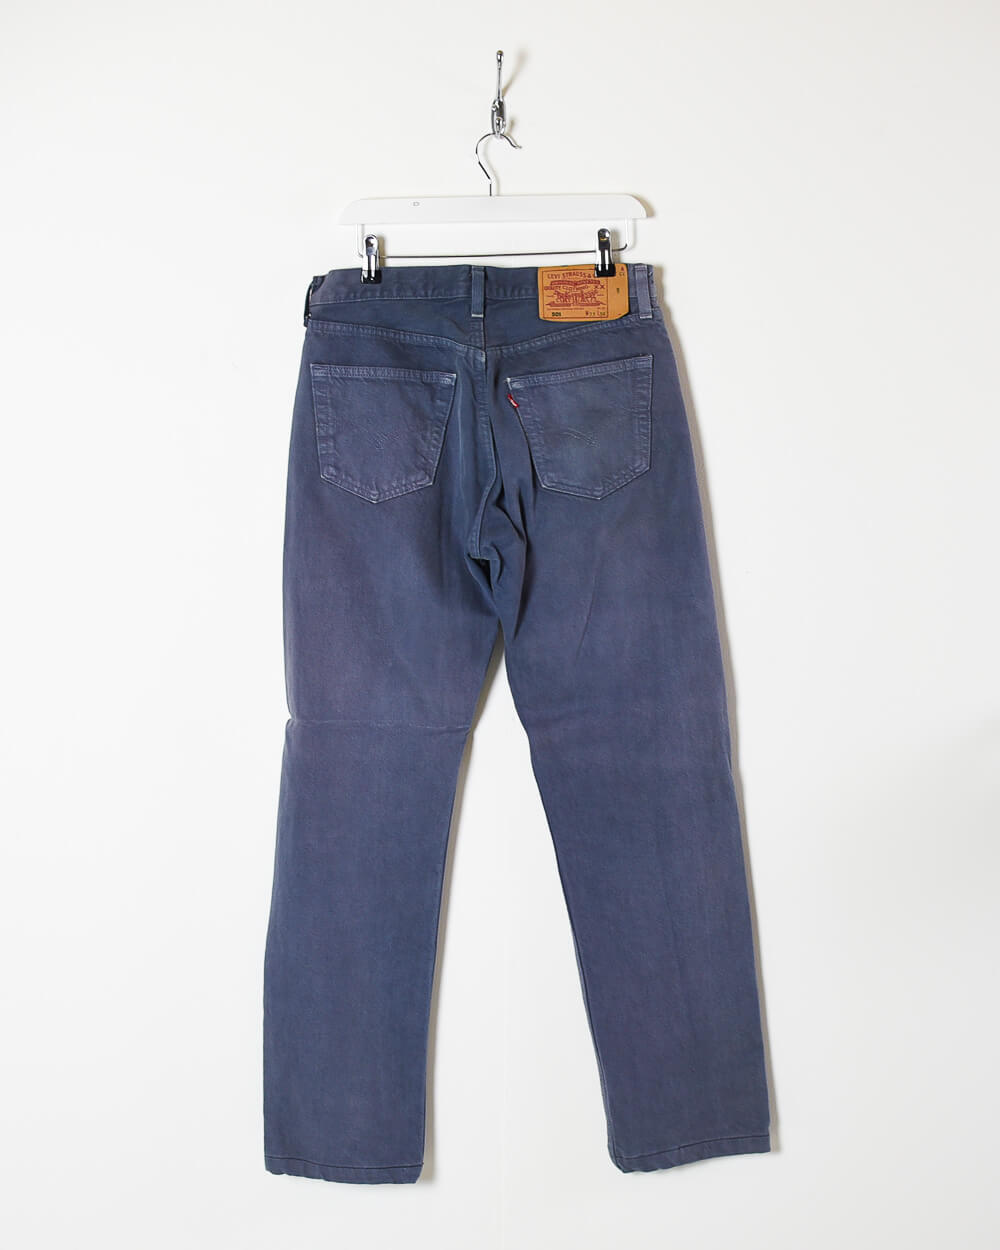 Blue Levi Strauss & Co. Jeans - W33 L32